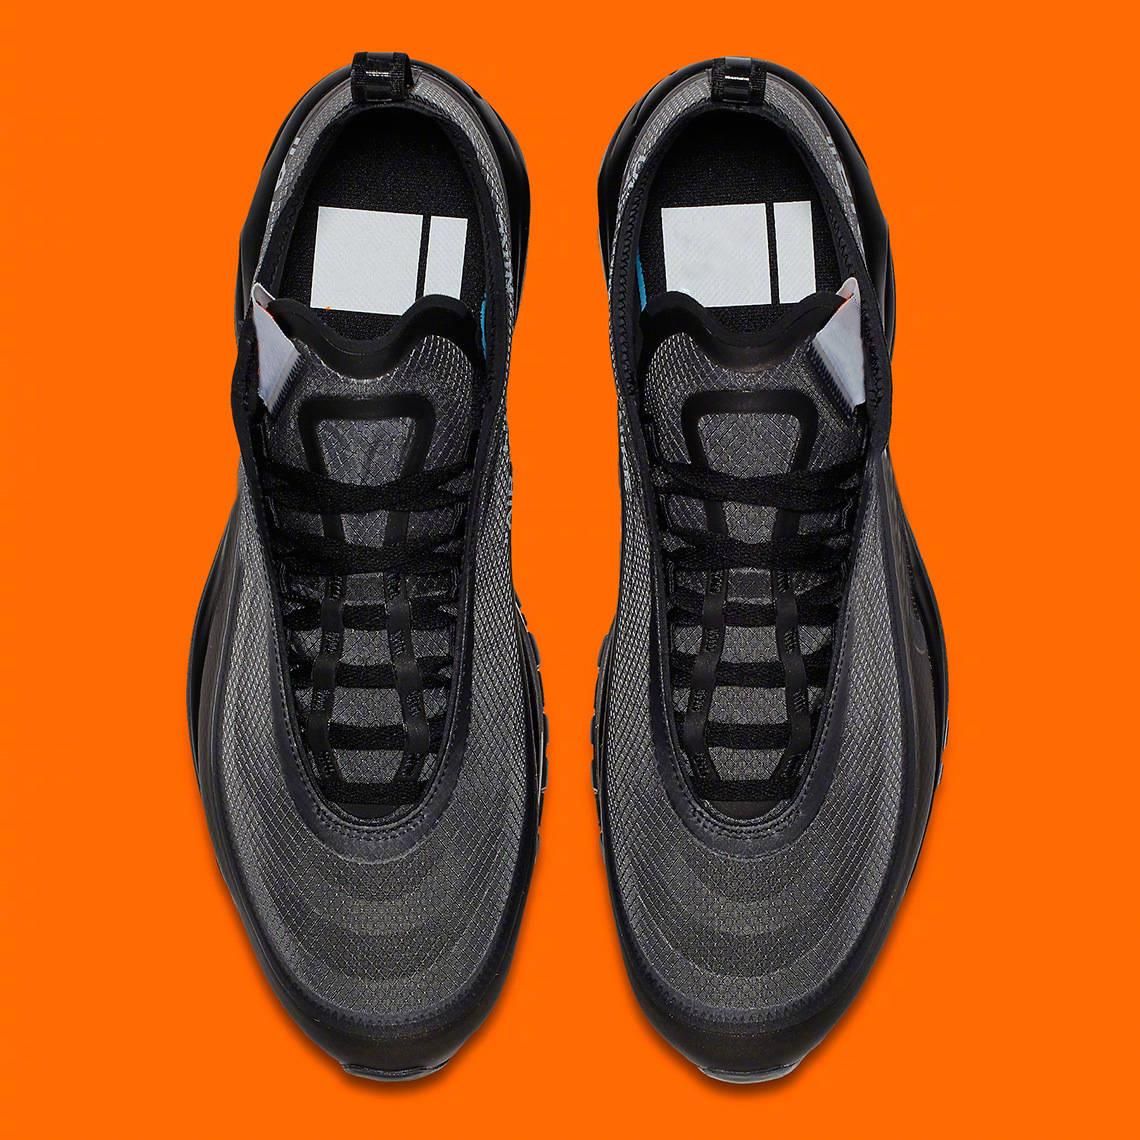 Max 97 OG Sneakers Black Cone Black 